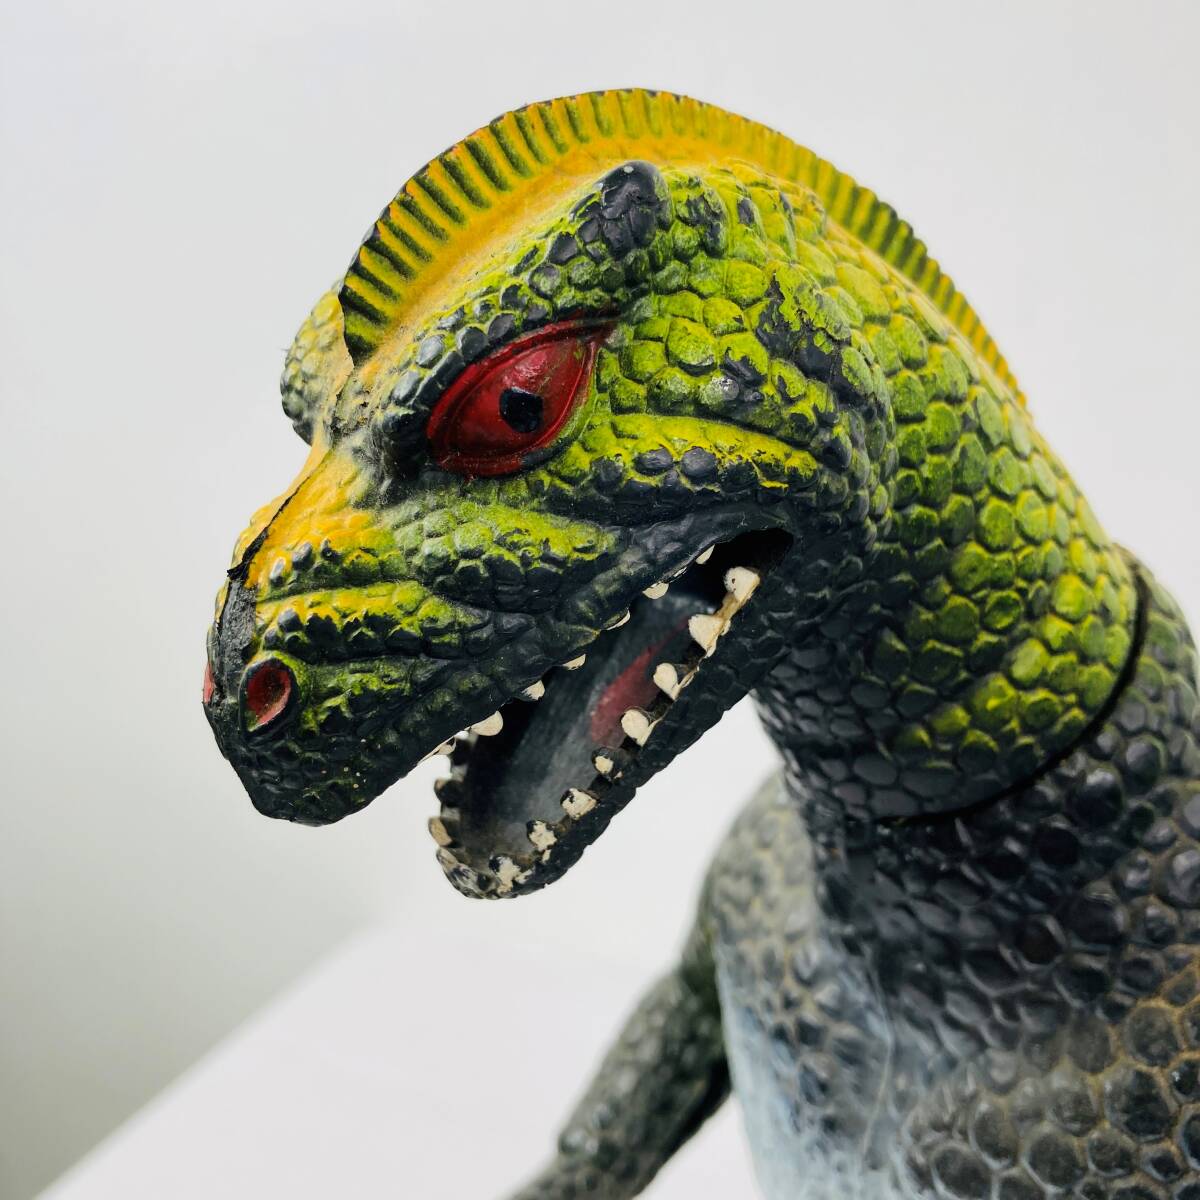 [ used ] Godzilla manner figure sofvi abroad made? monster 